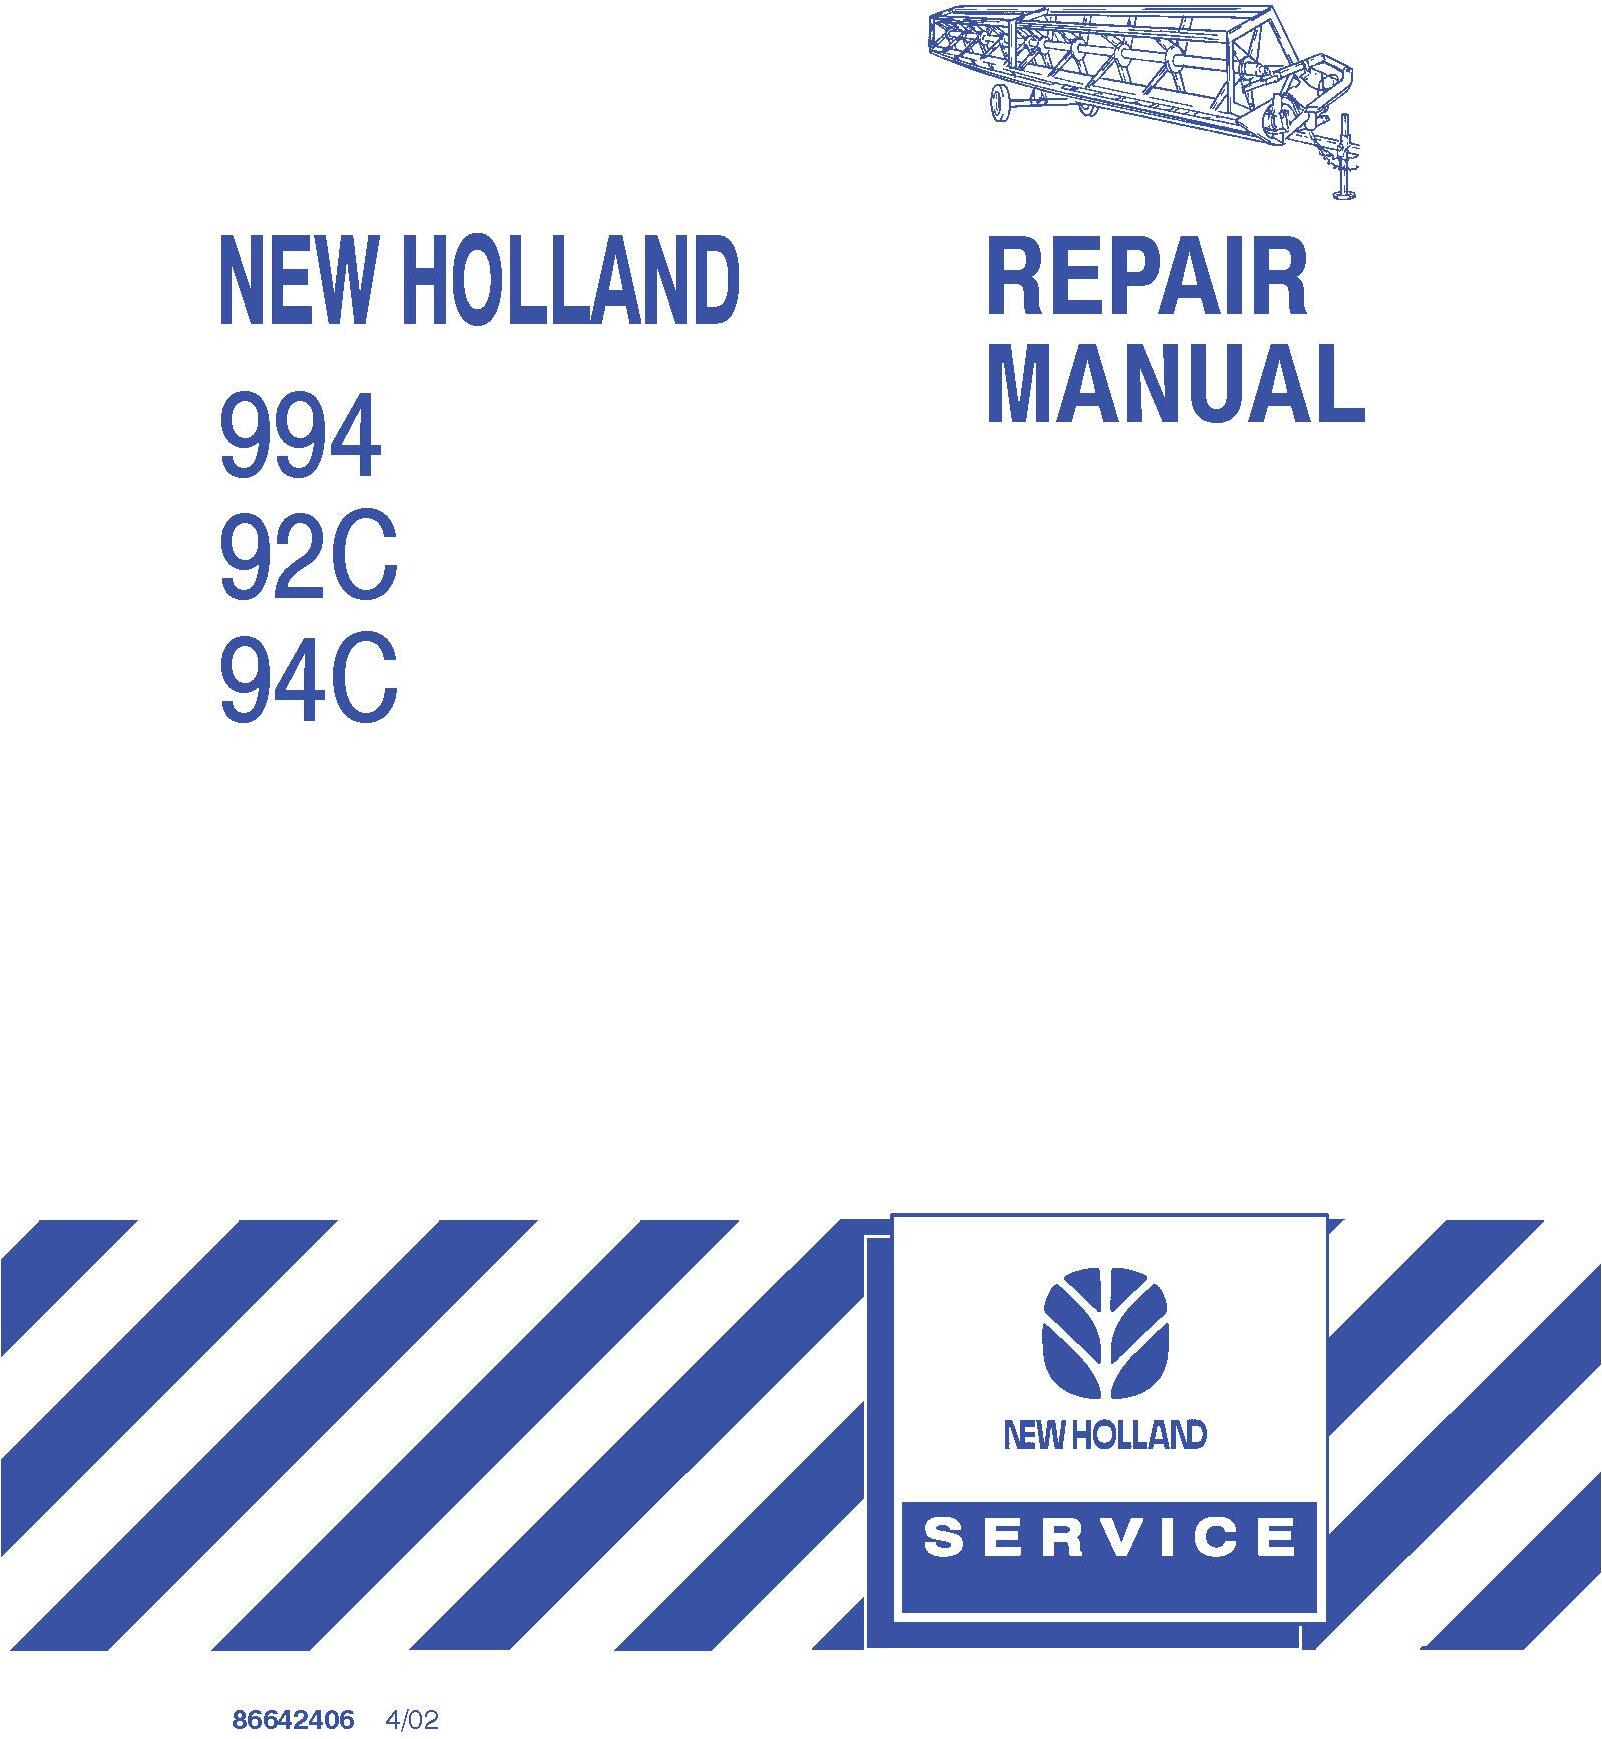 New Holland 994, 92c, 94c Grain Belt Headers Service Manual